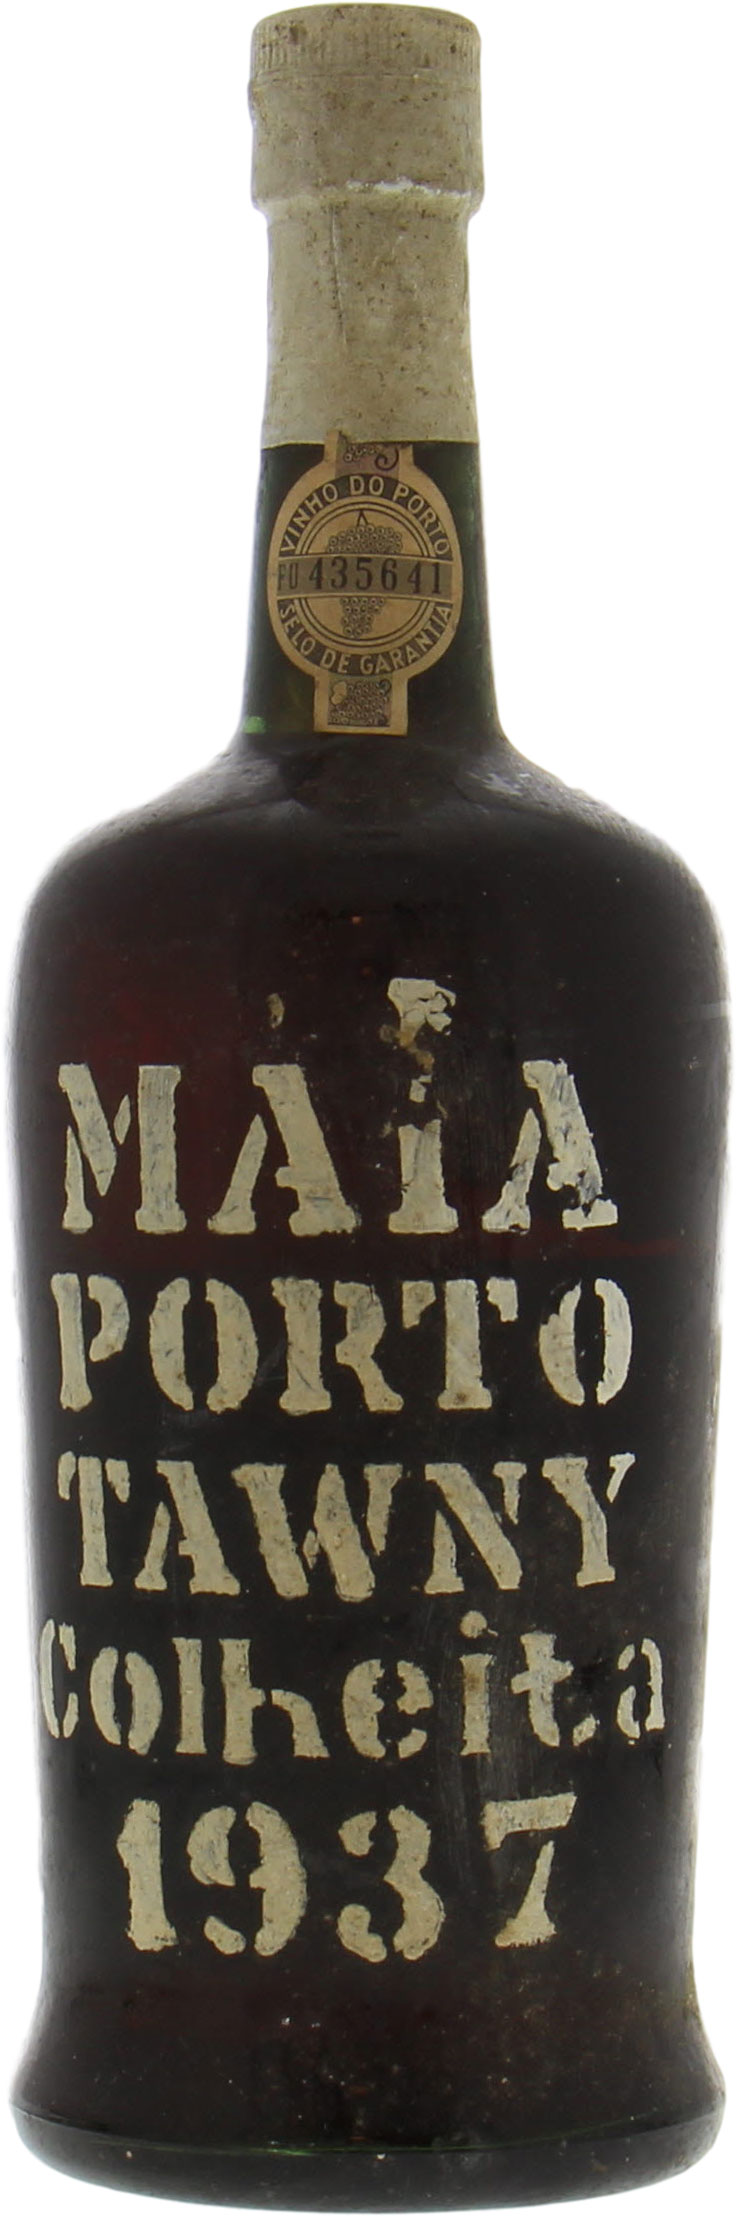 Maia - Colheita Port 1937 perfect